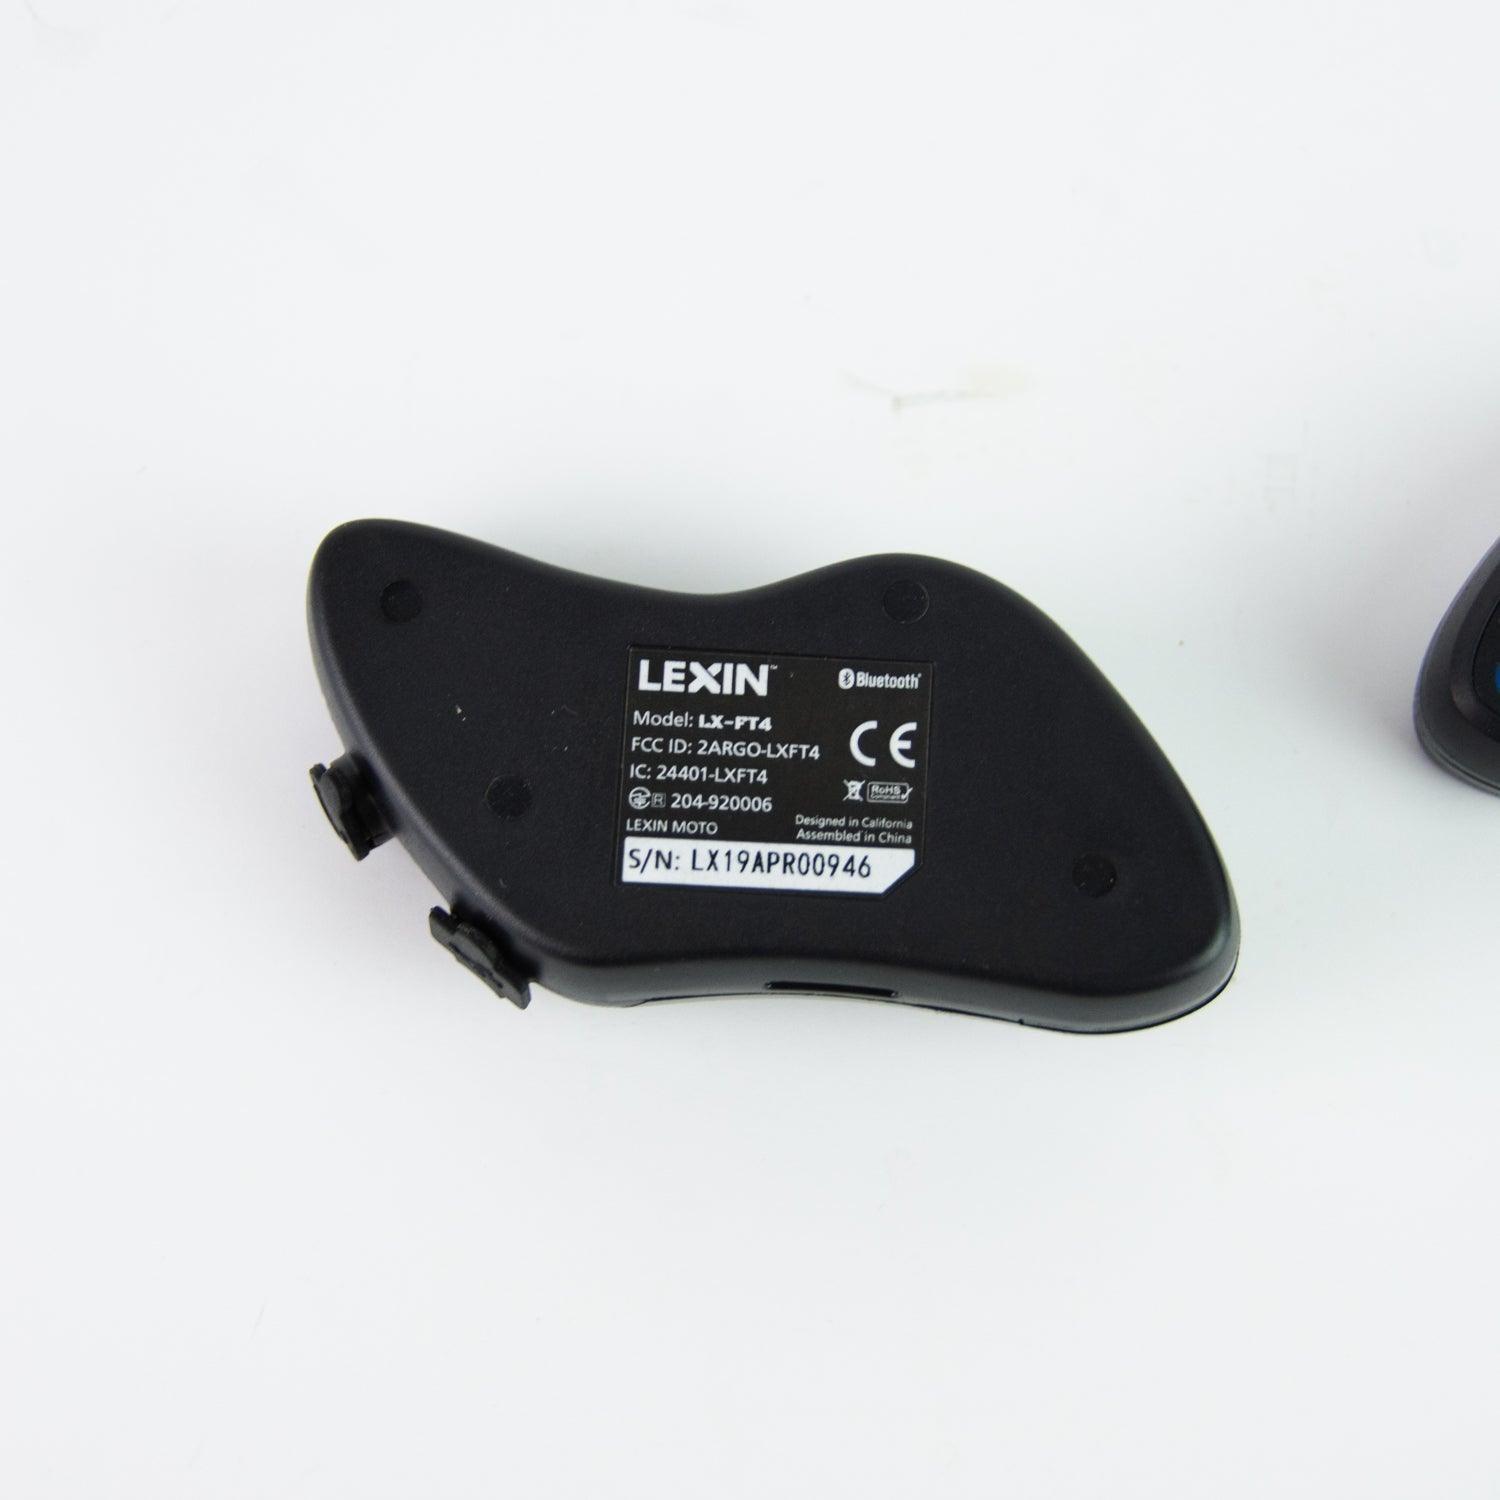 Lexin LX-FT4 Bluetooth Motorcycle Headset - 4 Way Speaker - 2 pcs - ipawnishop.com